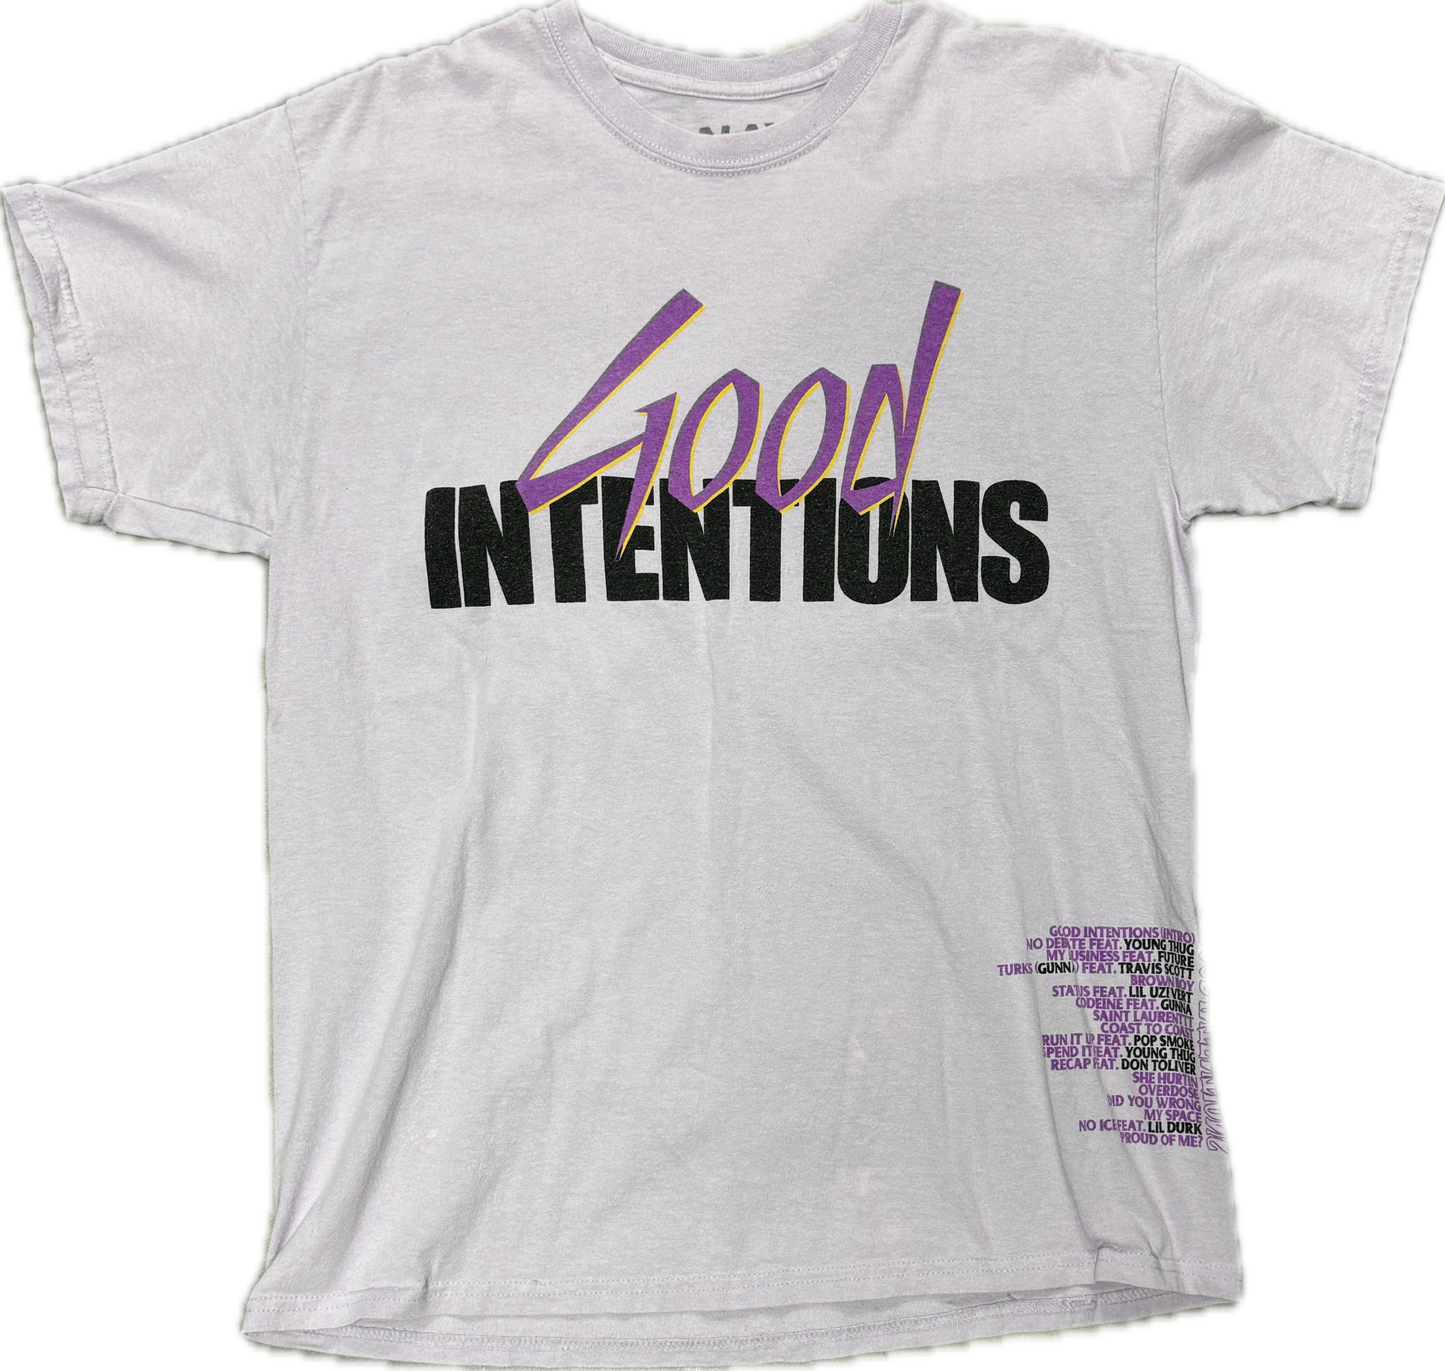 Good intentions Nav x Vlone Tee